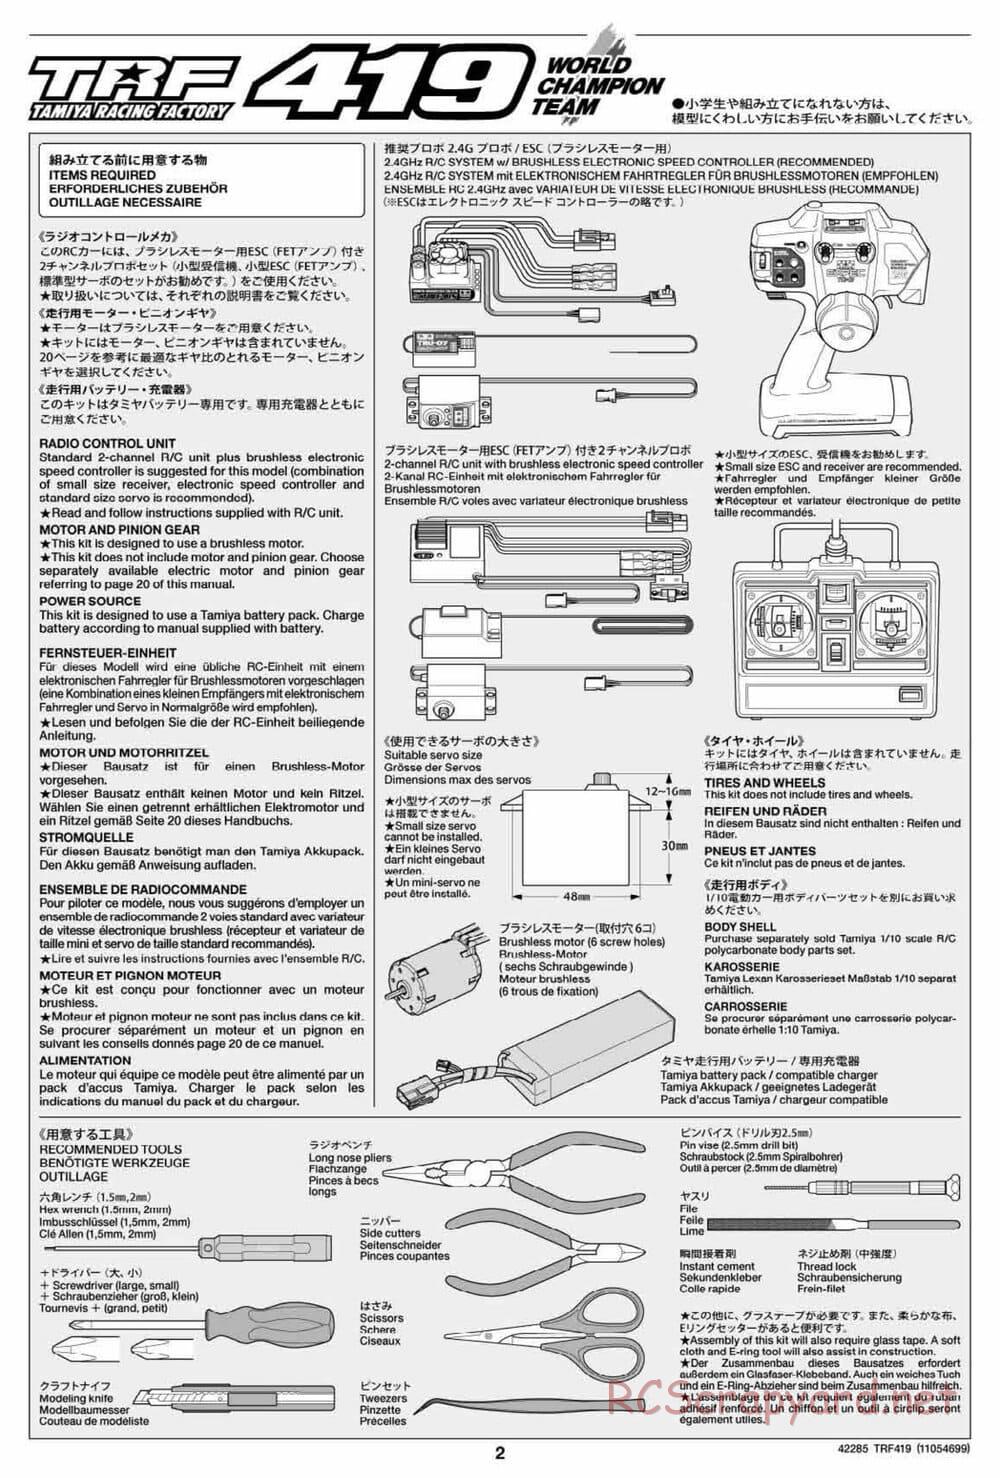 Tamiya - TRF419 Chassis - Manual - Page 2